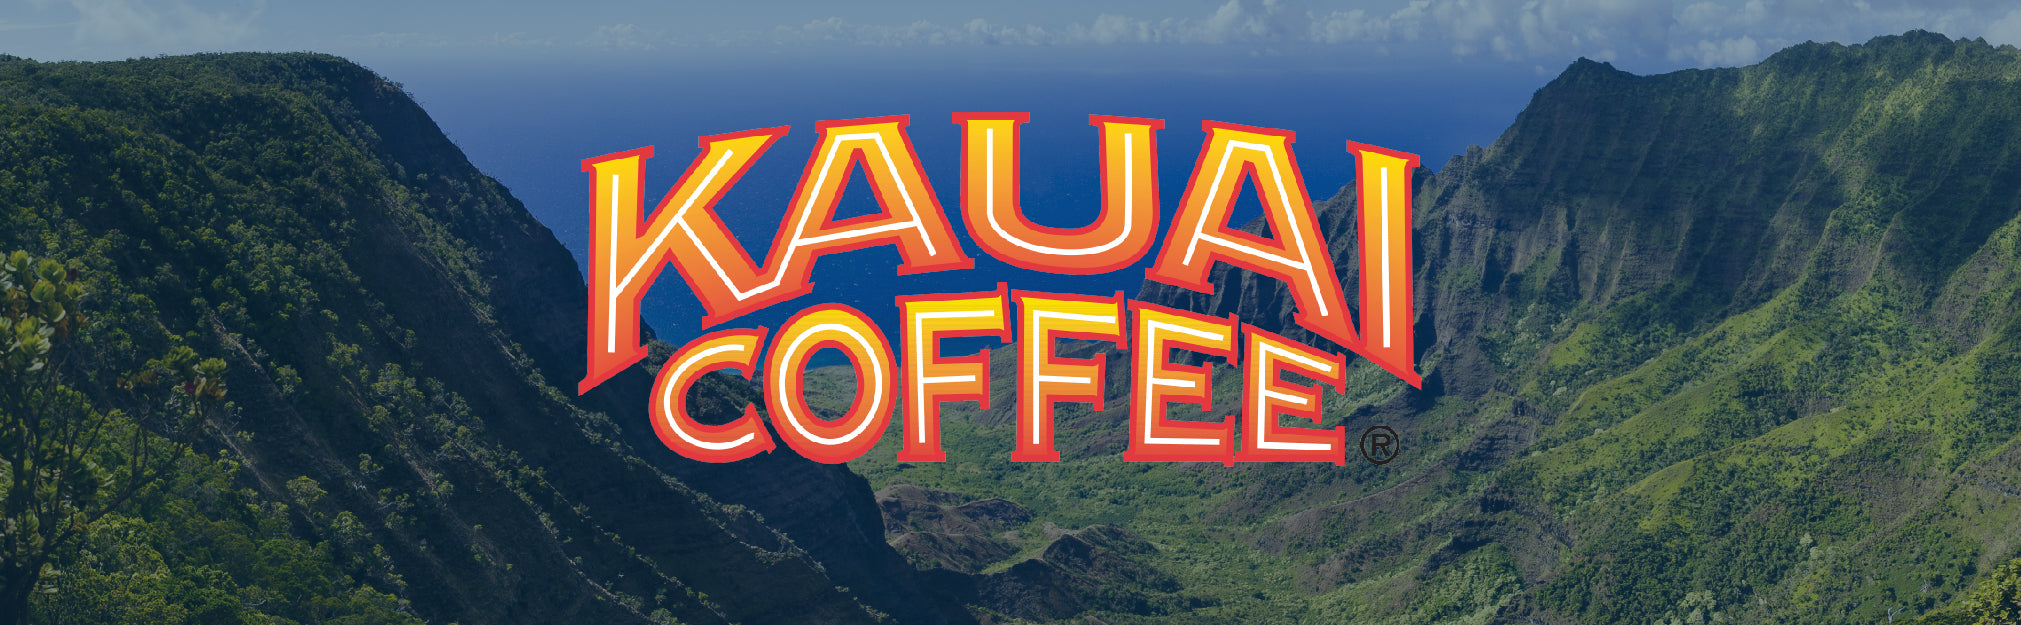 Kauai Coffee over Hawaii